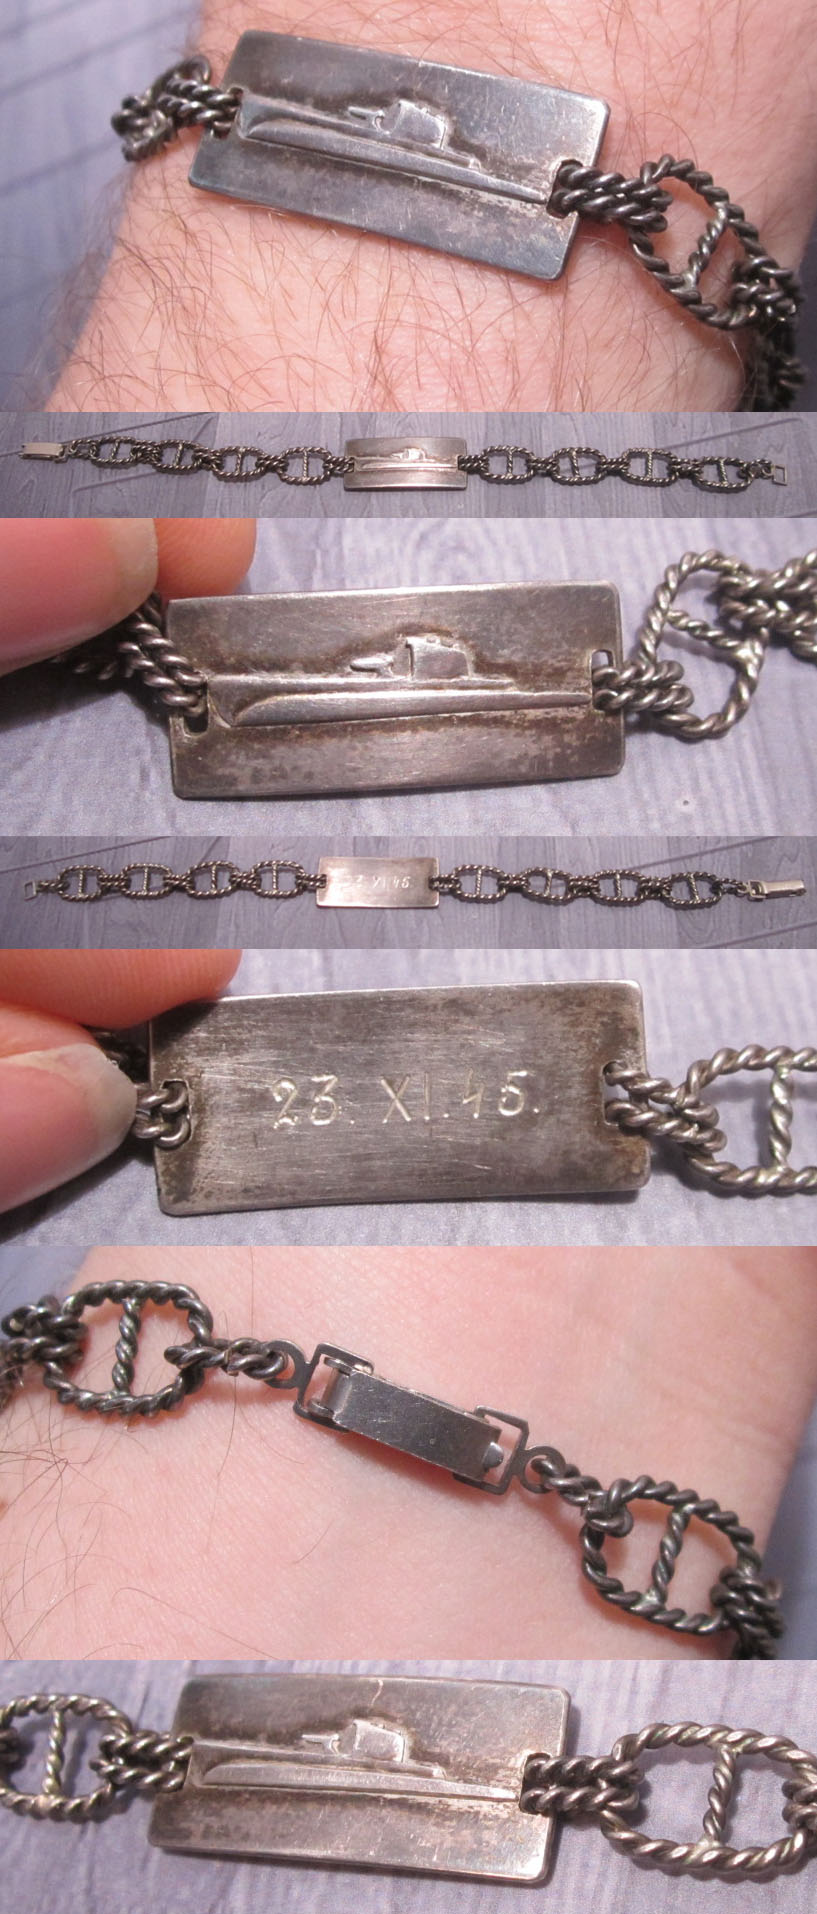 Submarine Sweetheart Bracelet 1945